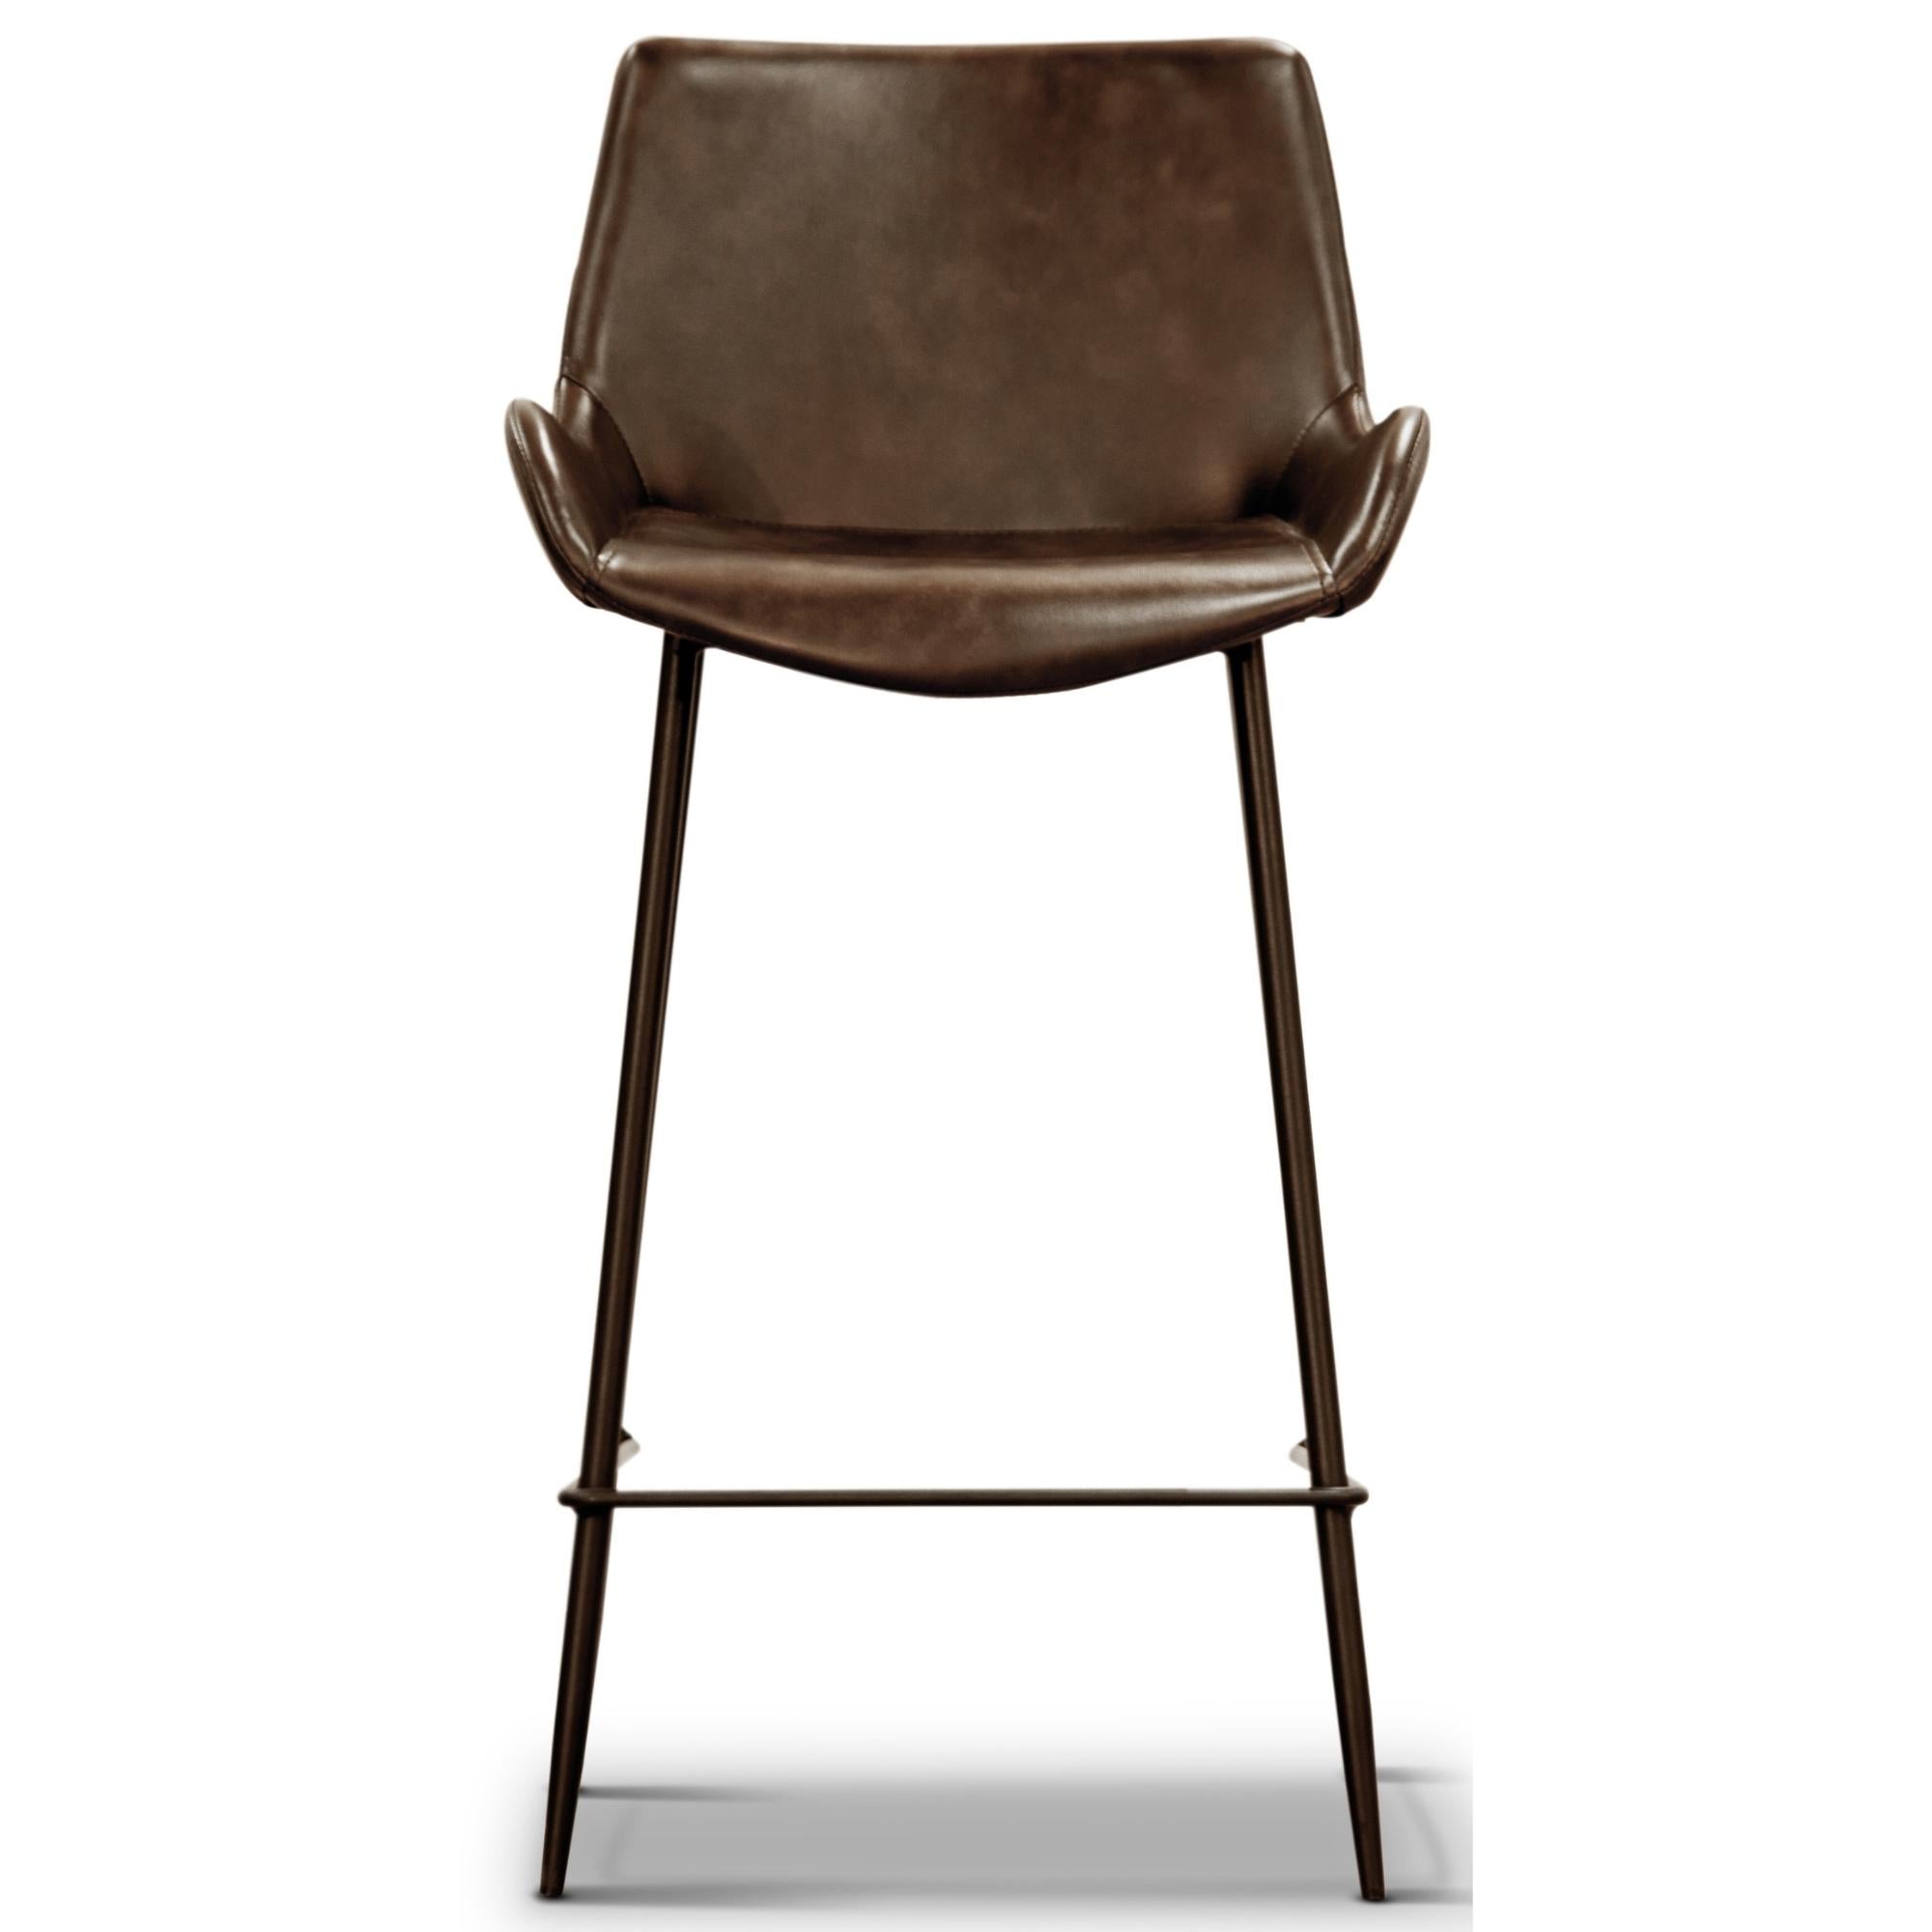 Set of 2 PU Leather Upholstered Bar Chair Metal Leg Stool - Brown